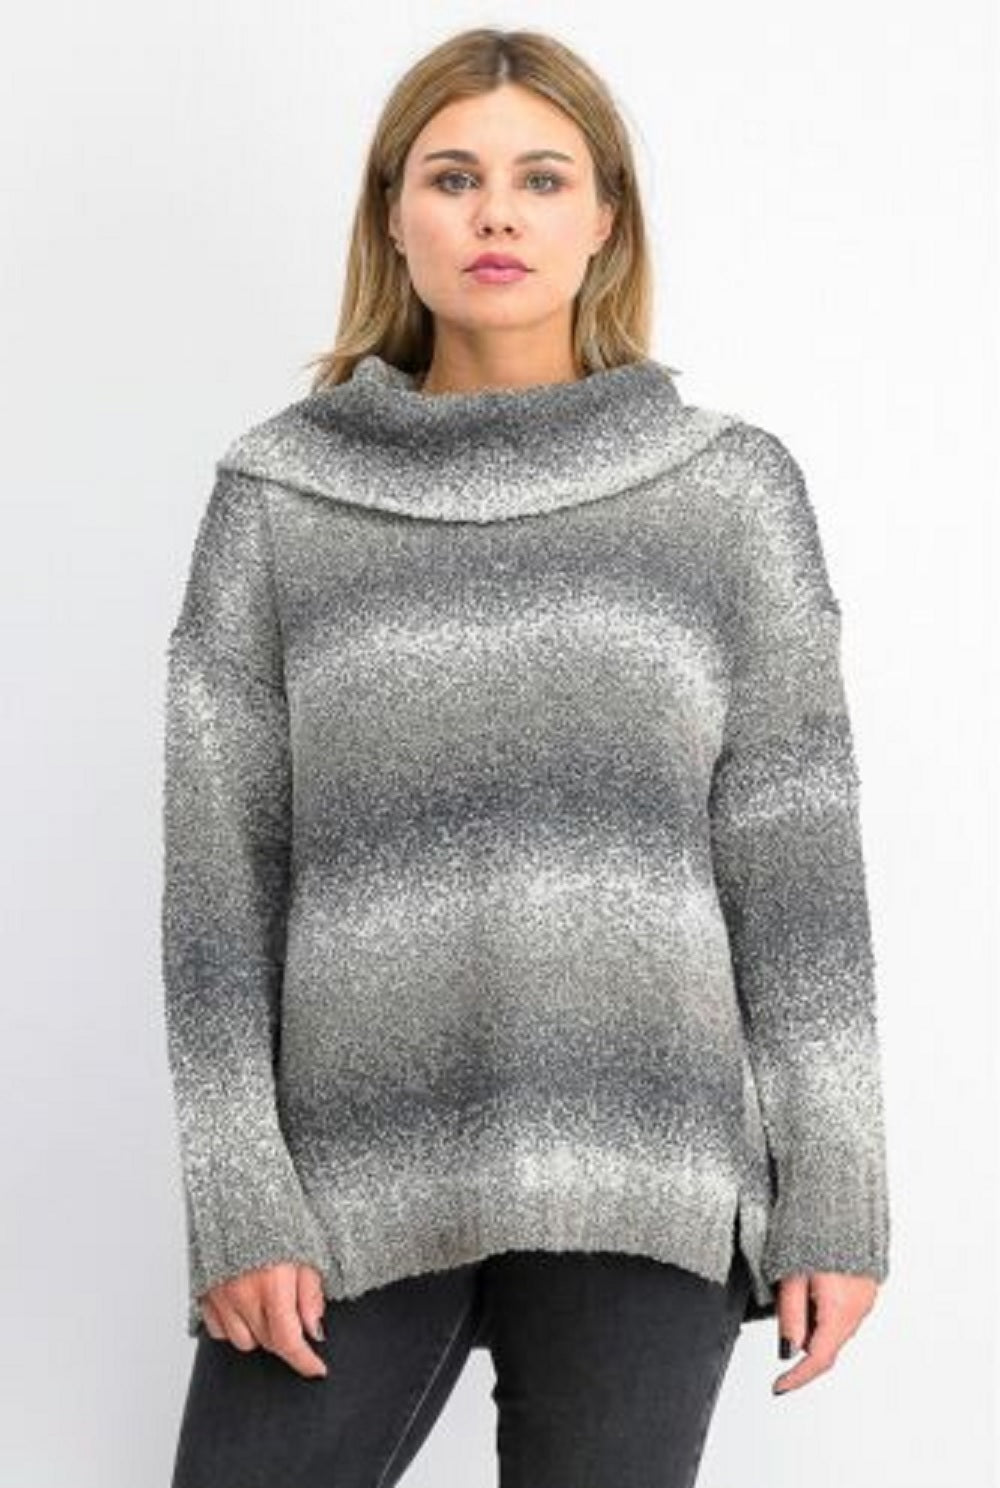 Style & Co Women's Ombre Boucle Sweater Black Size Medium